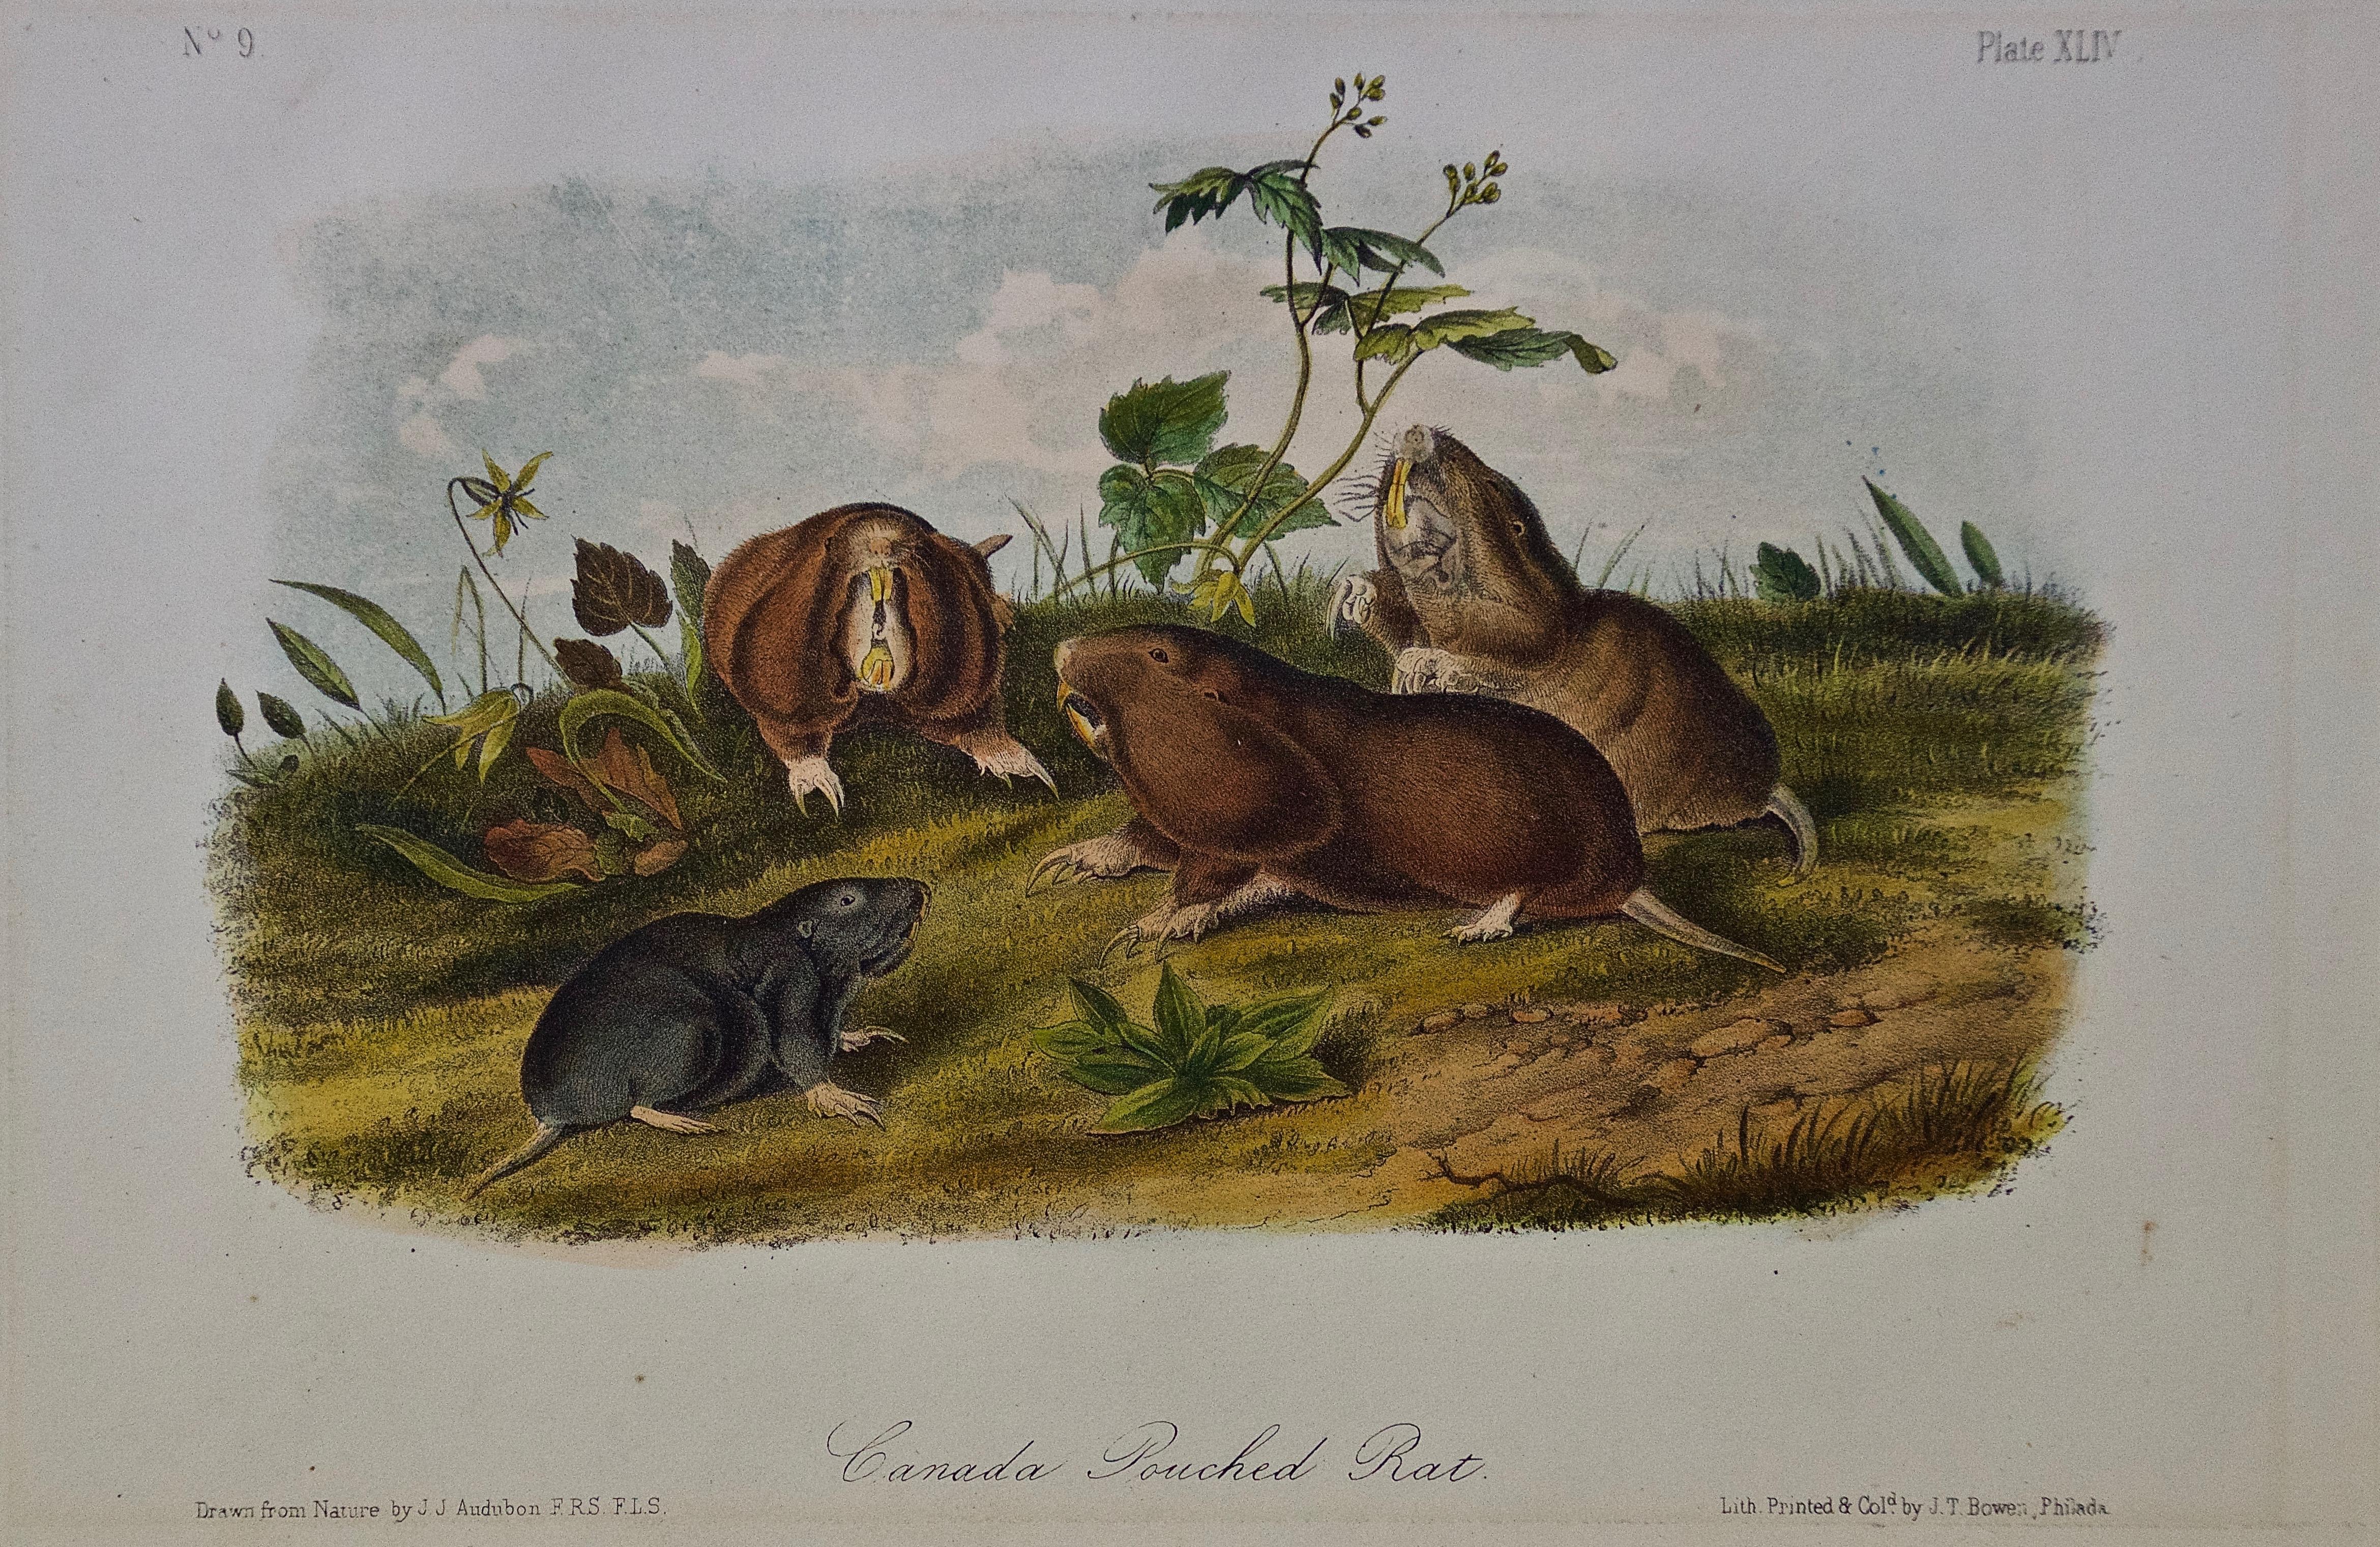 Original Audubon Hand Colored Lithograph of a "Canada Pouched Rat"